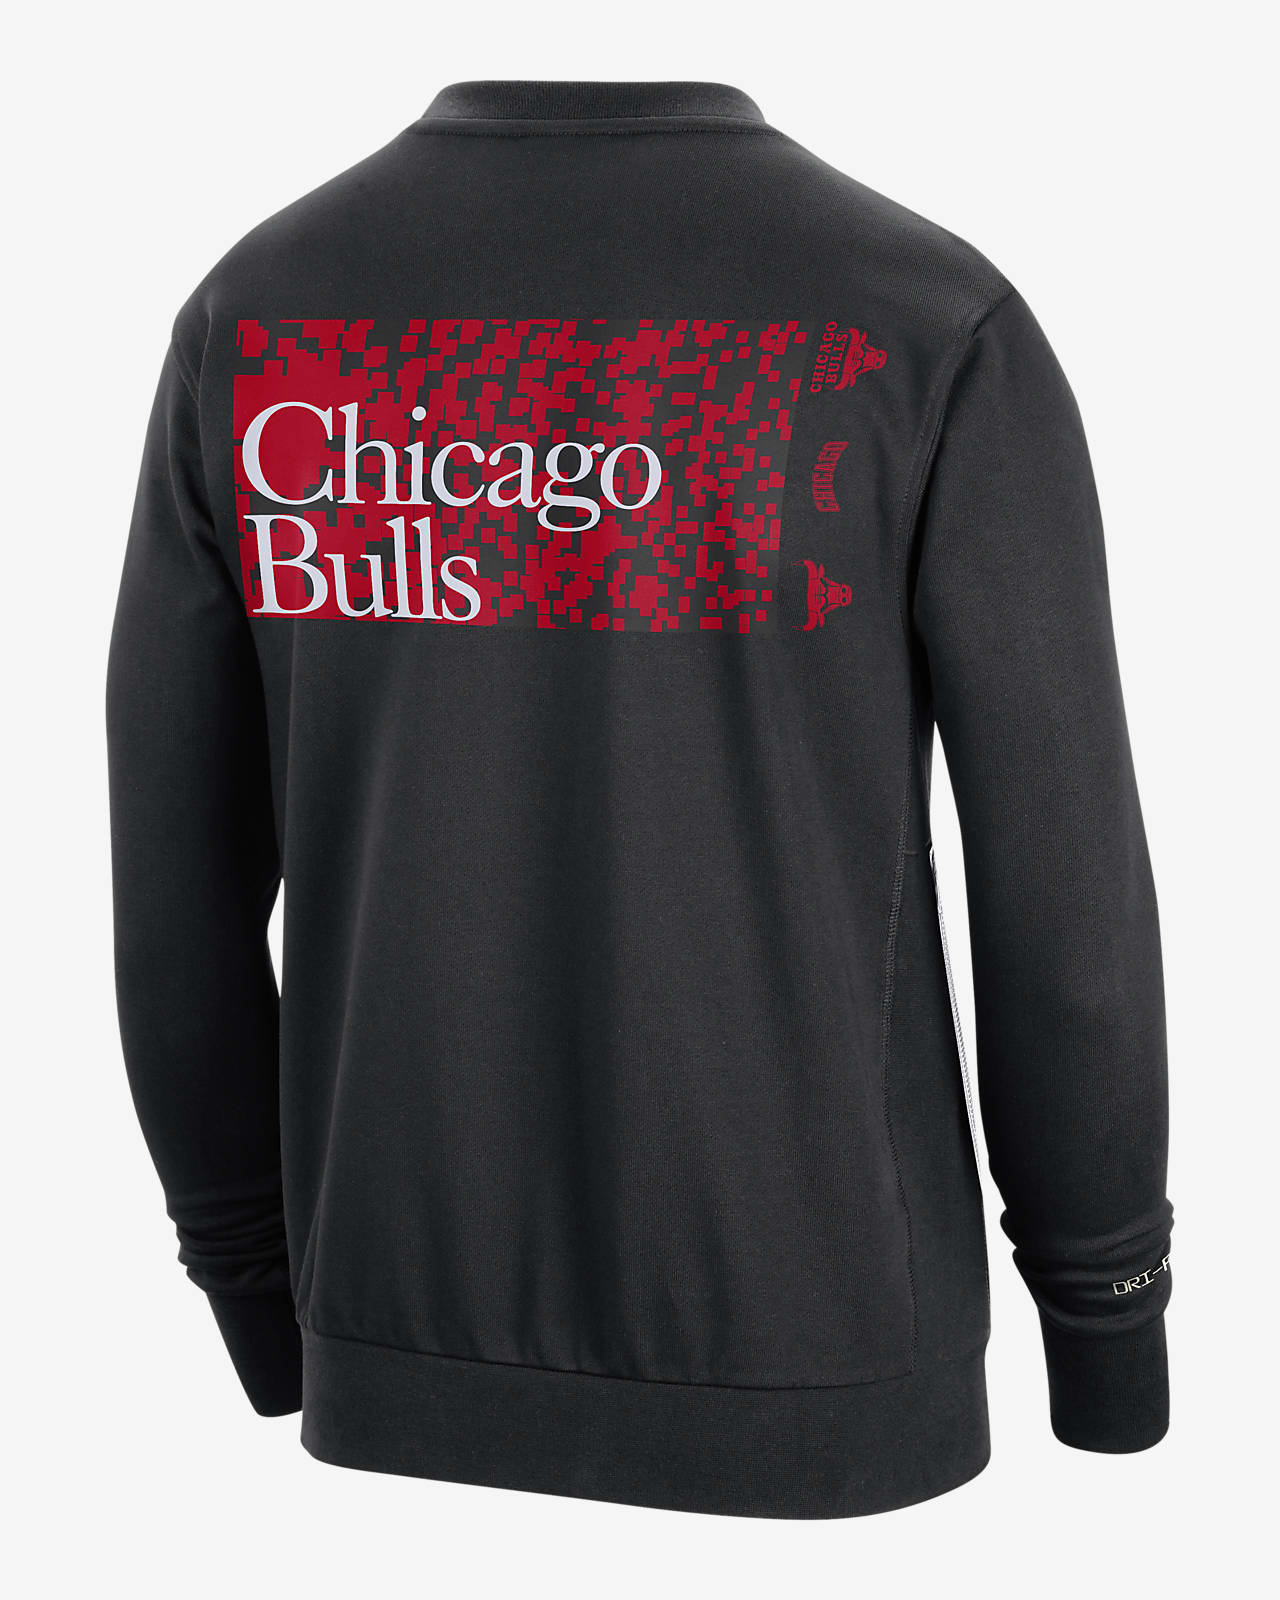 Chicago Bulls Standard Issue Men's Nike Dri-FIT NBA Crew-Neck Sweatshirt